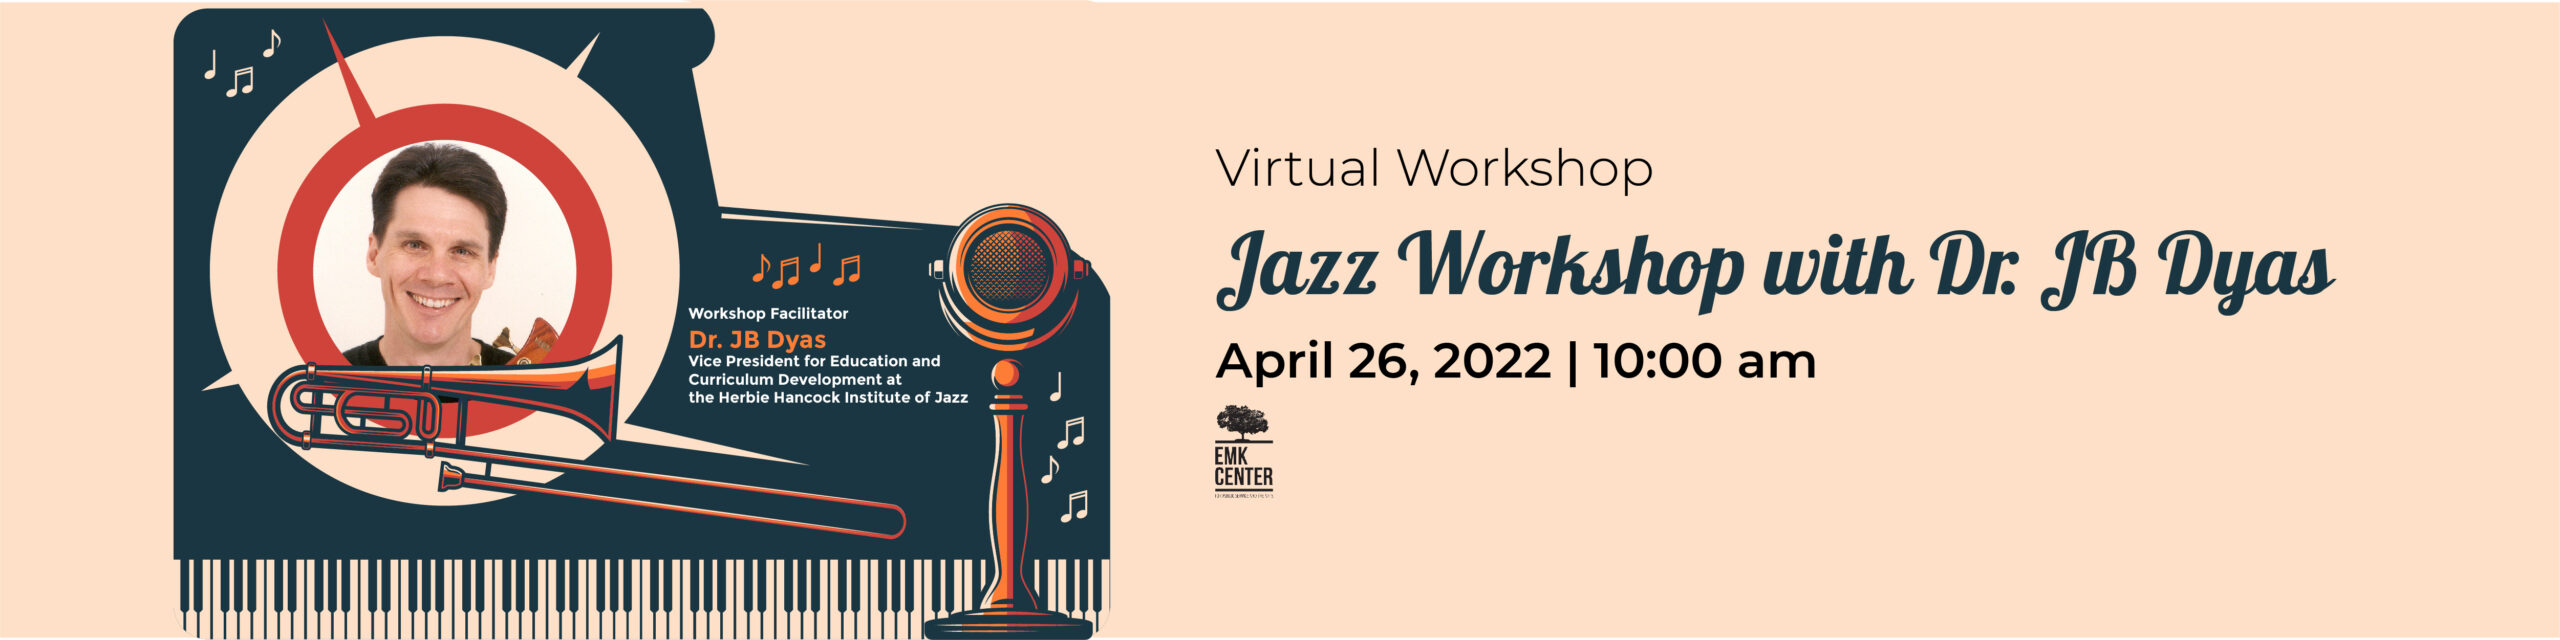 Jazz Workshop with Dr. JB Dyas